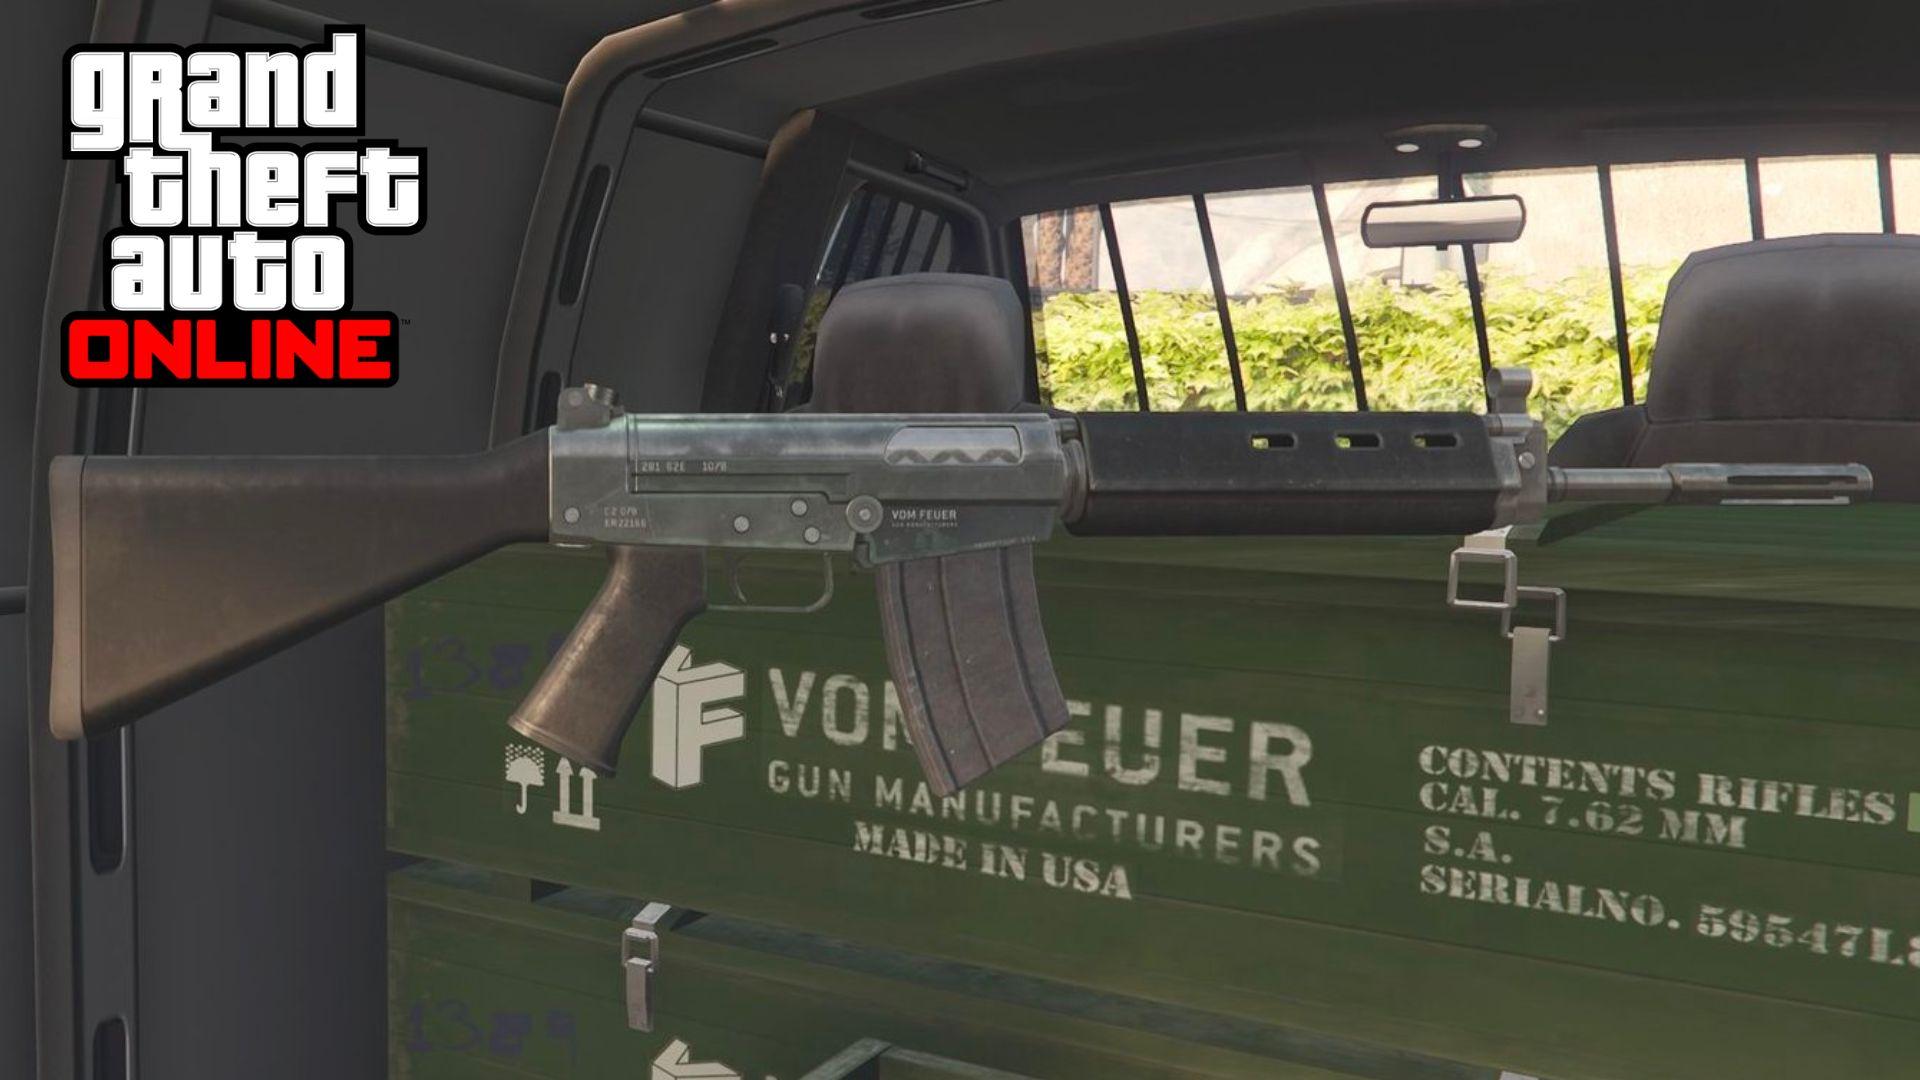 Battle Rifle in GTA Online floating in Gun Van above box